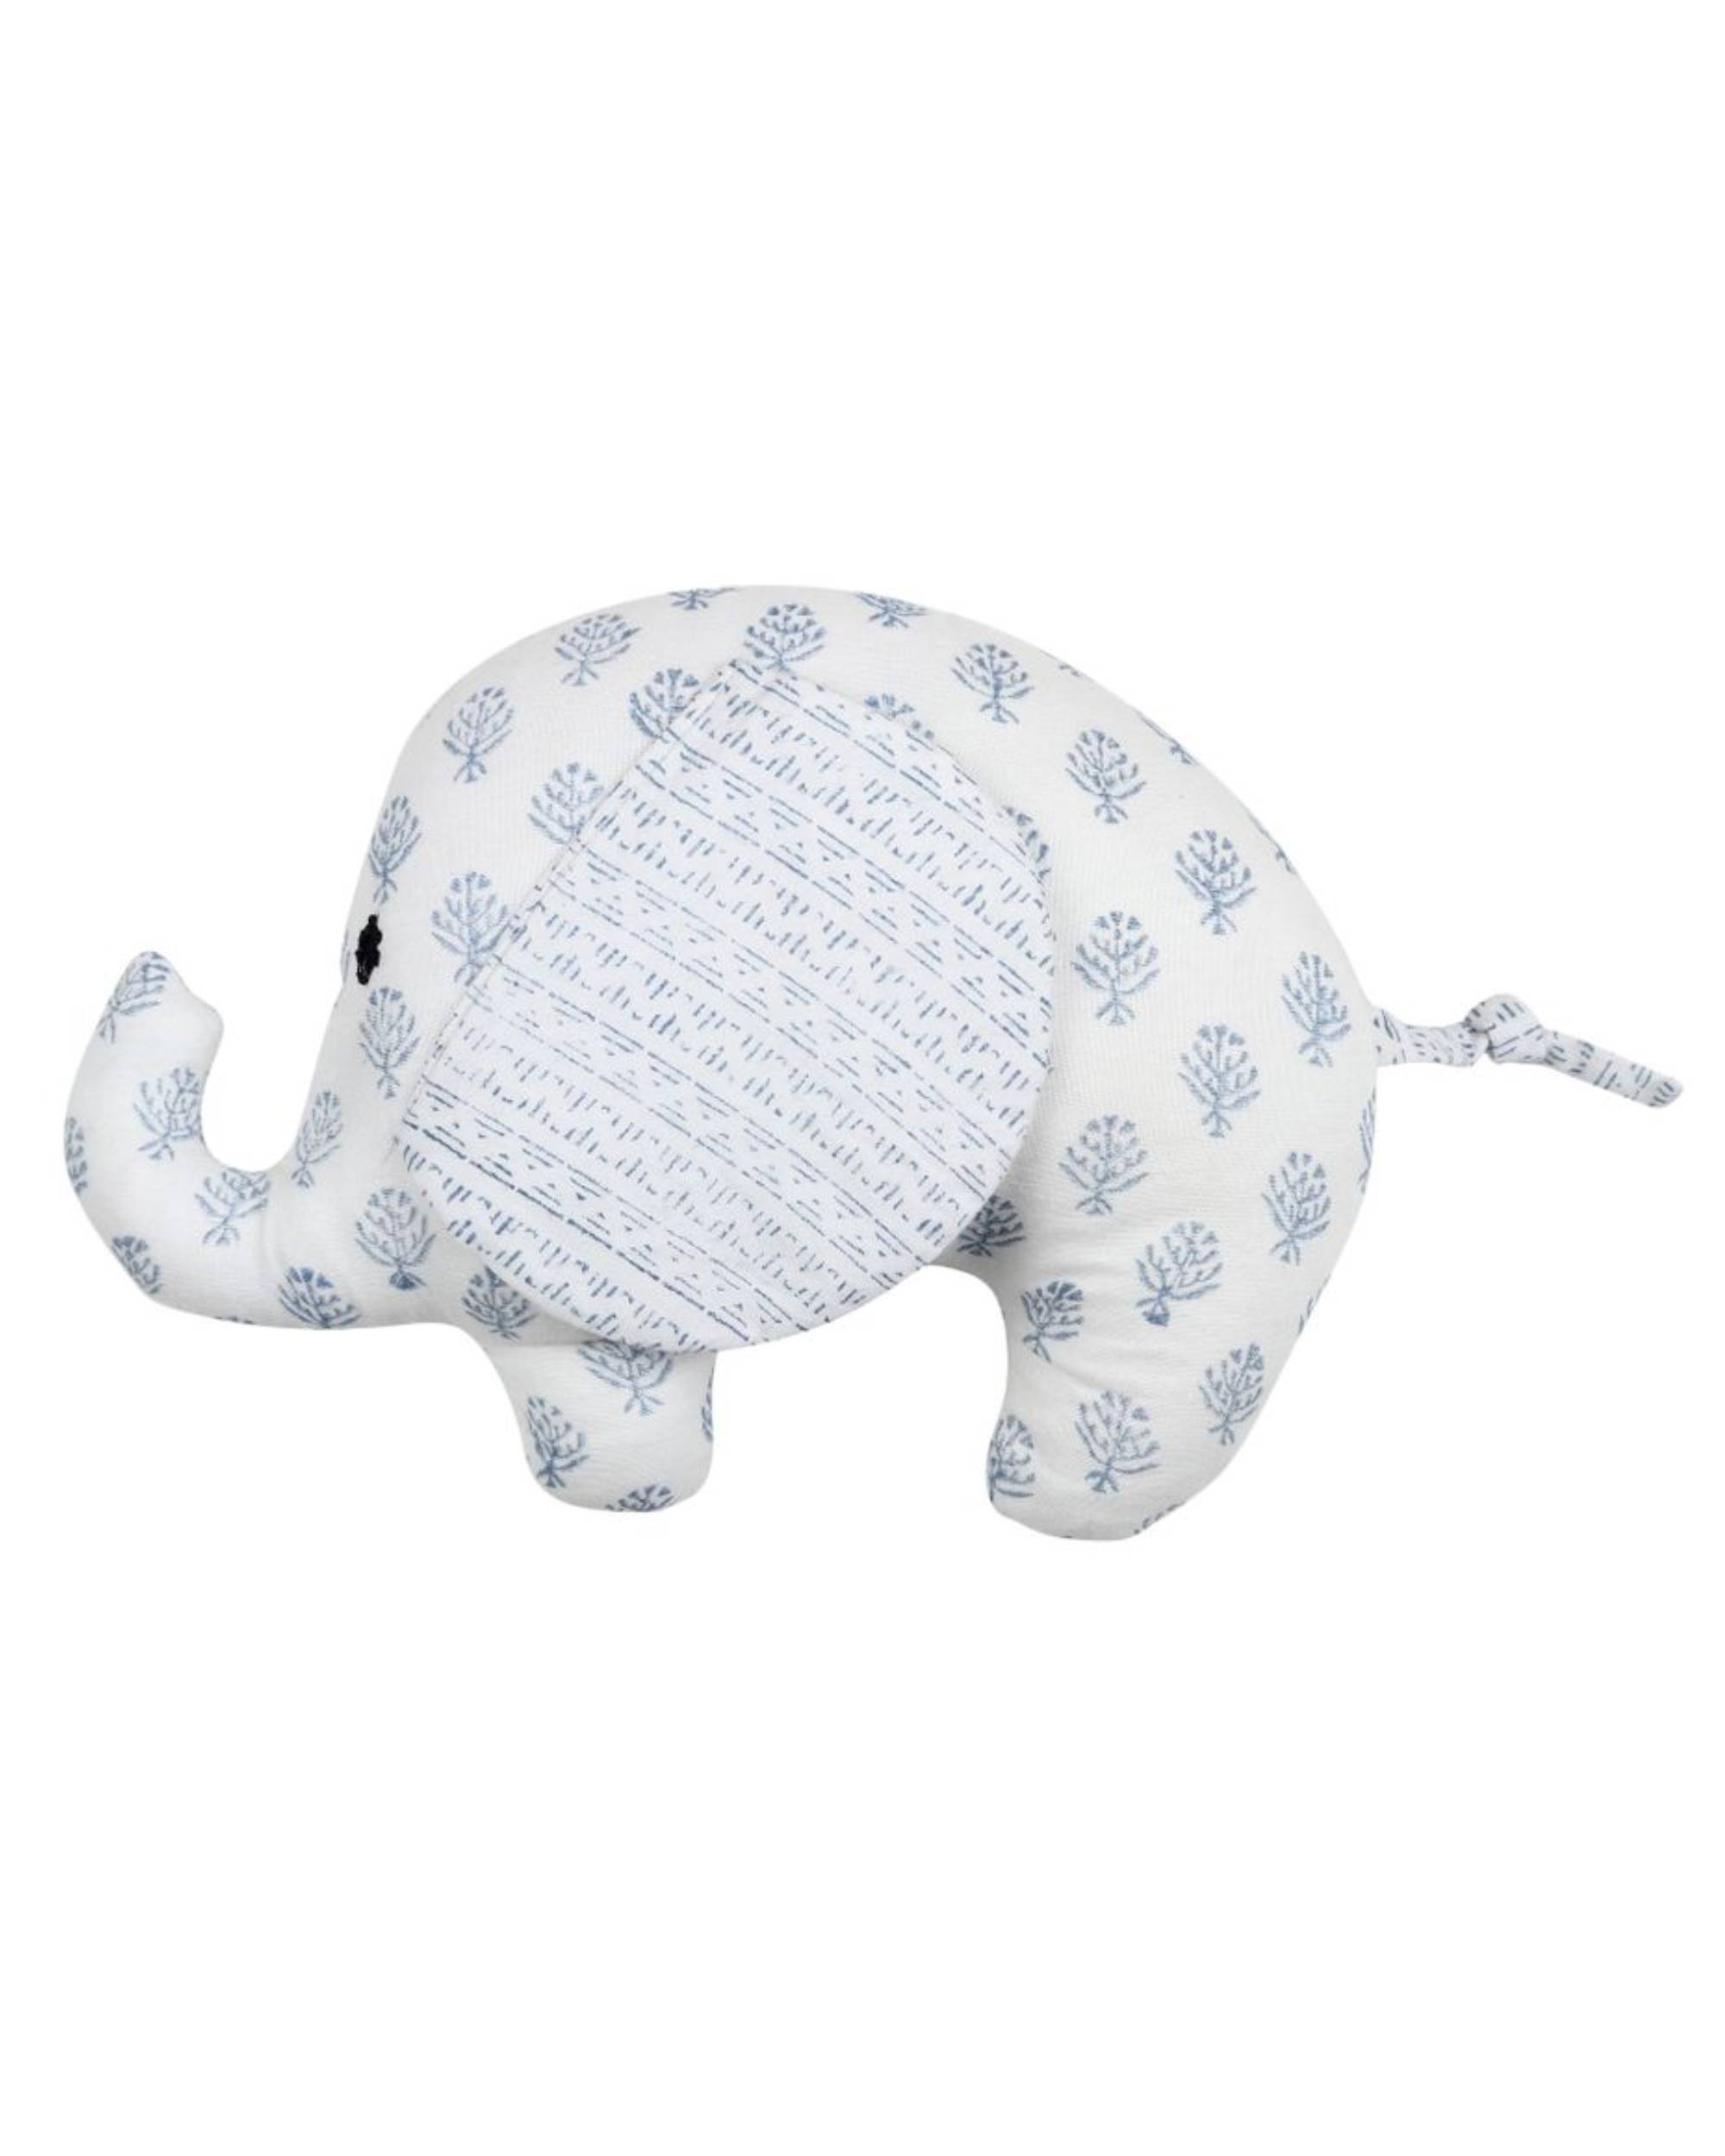 Block printed Elephant Toy